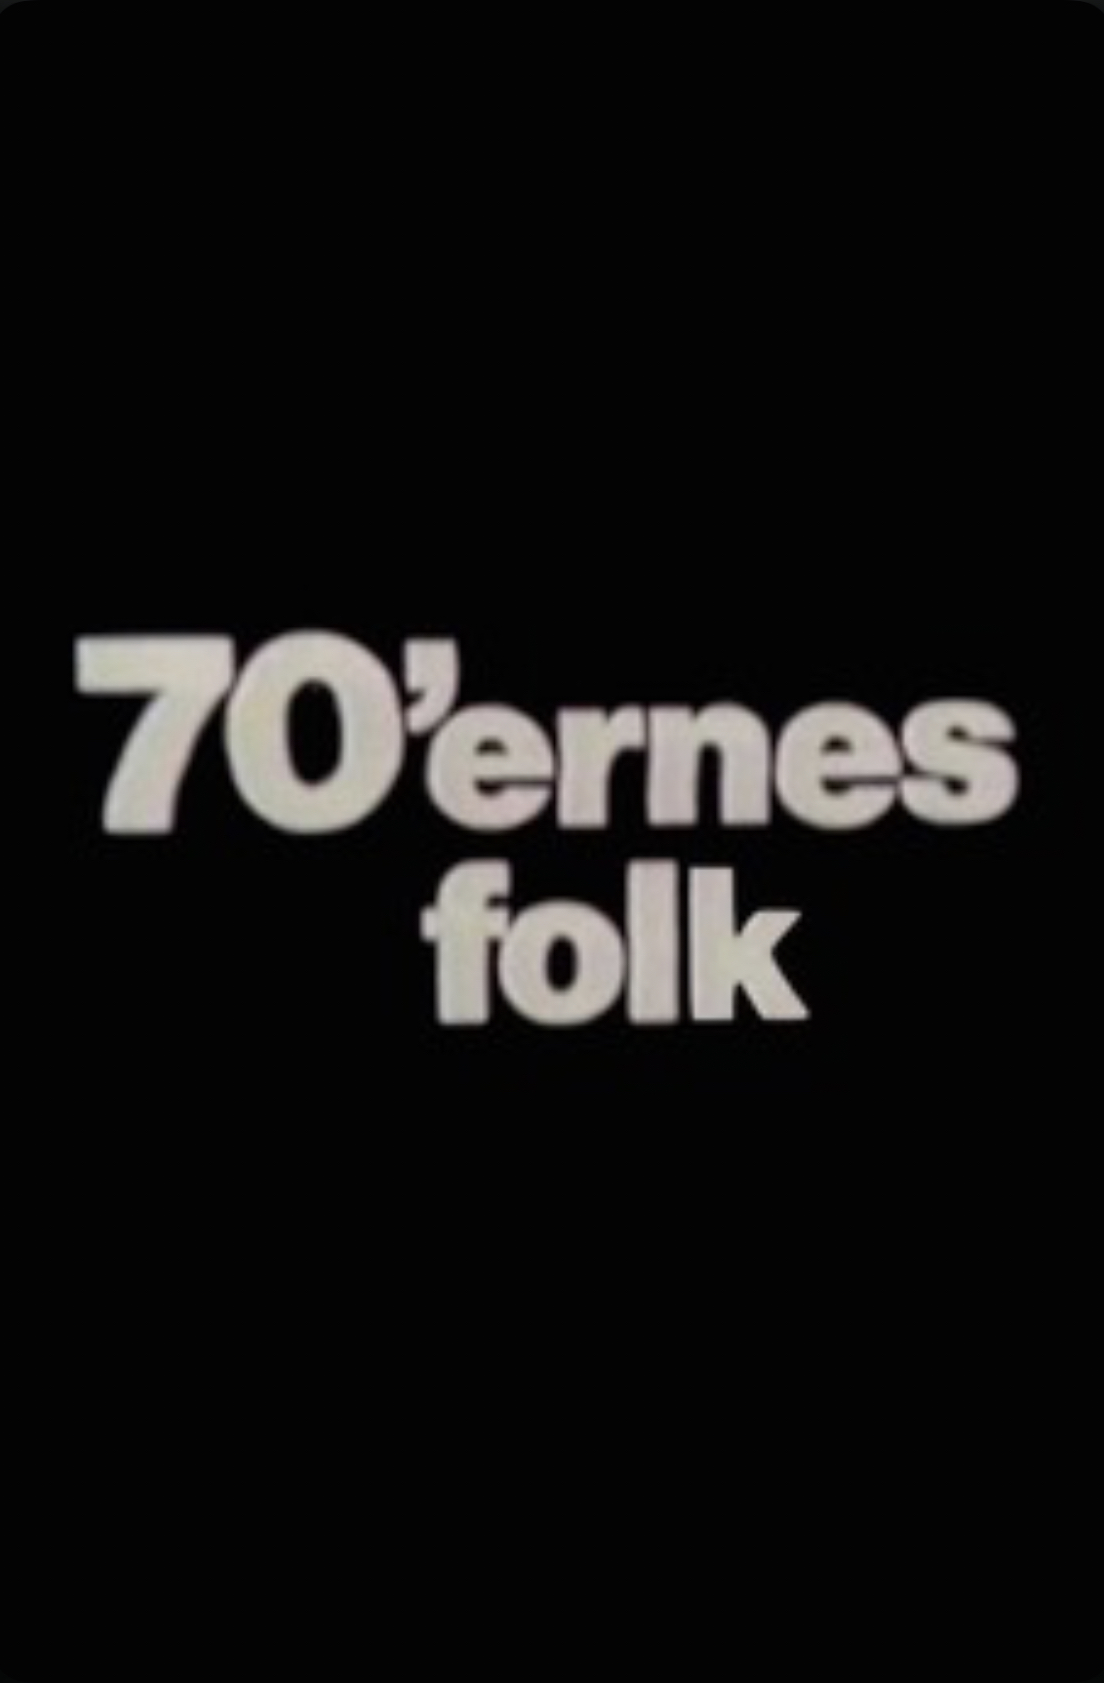 70'ernes folk (1975) Screenshot 1